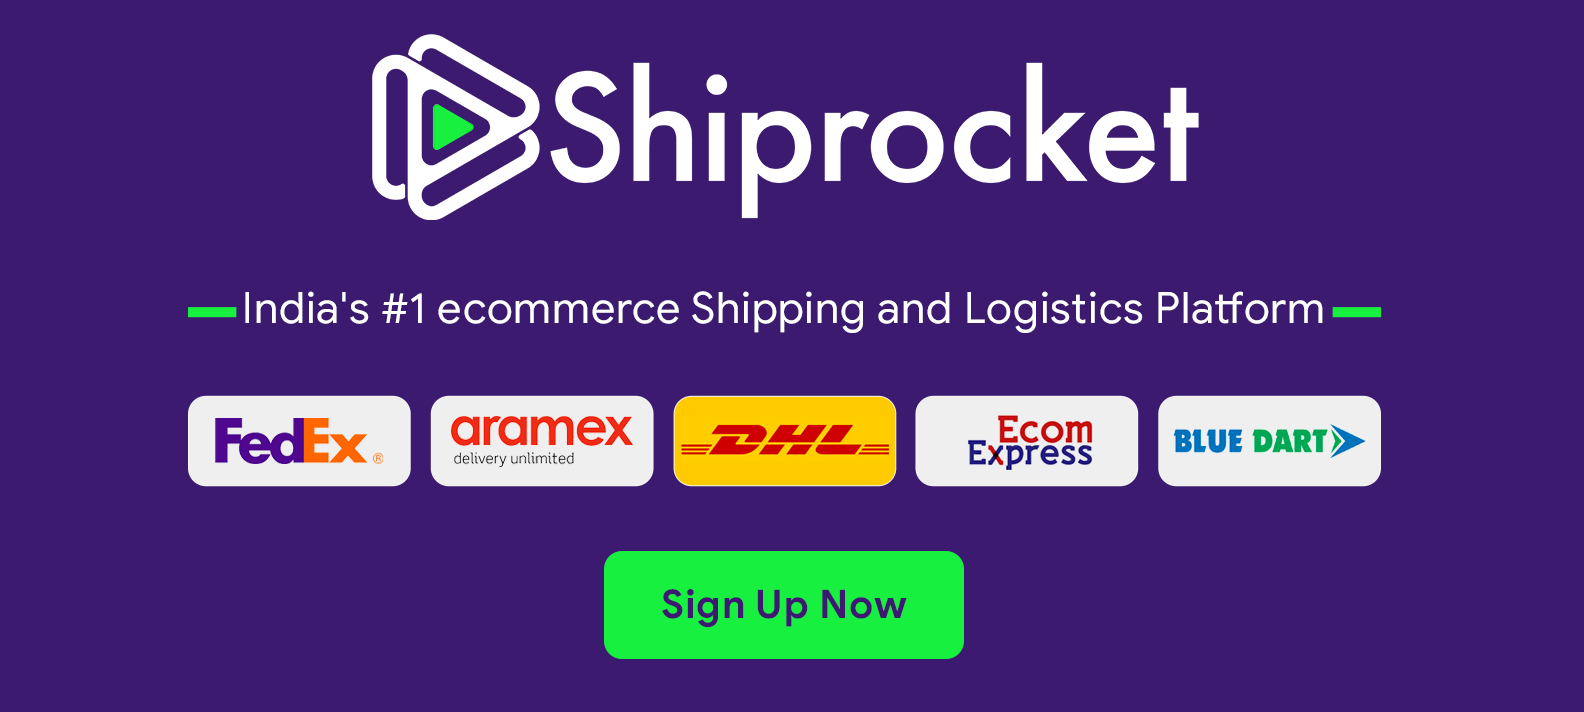 Shiprocket franchise for service providers